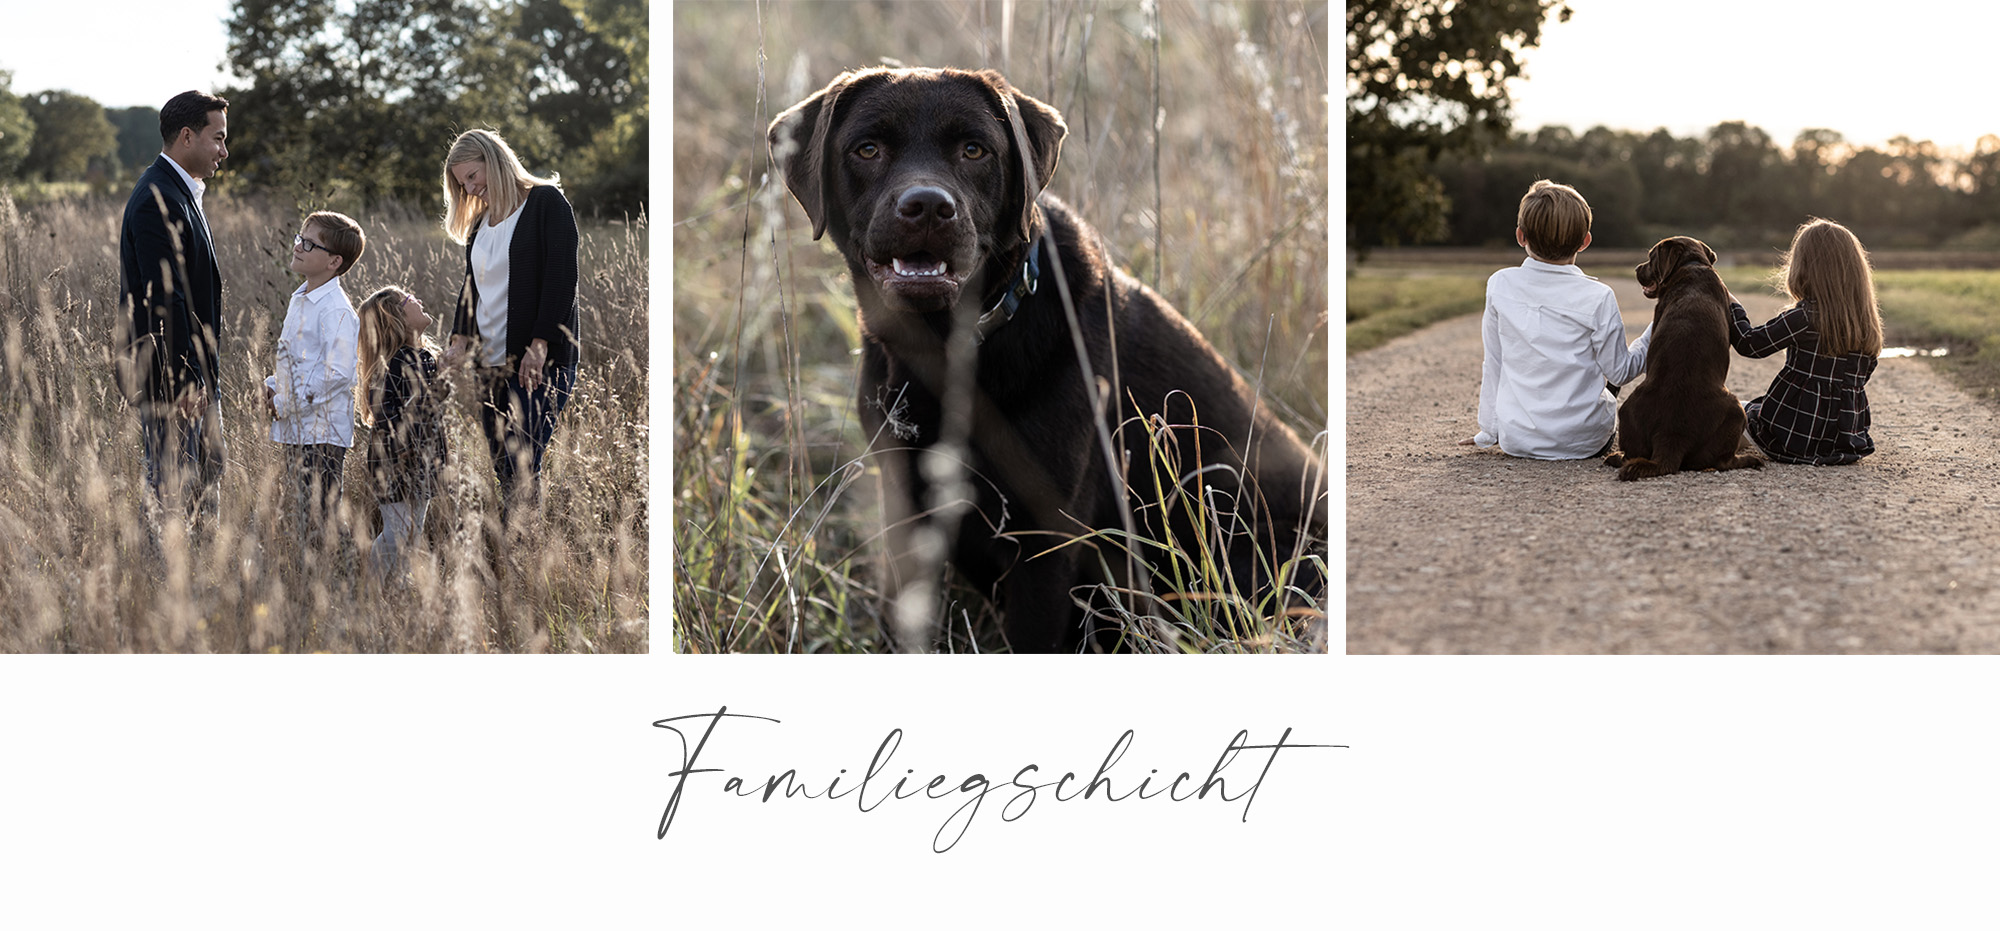 Familien Fotoshooting Fotograf Basel - Familienfotoshooting mit Kinder und Hund in der Natur